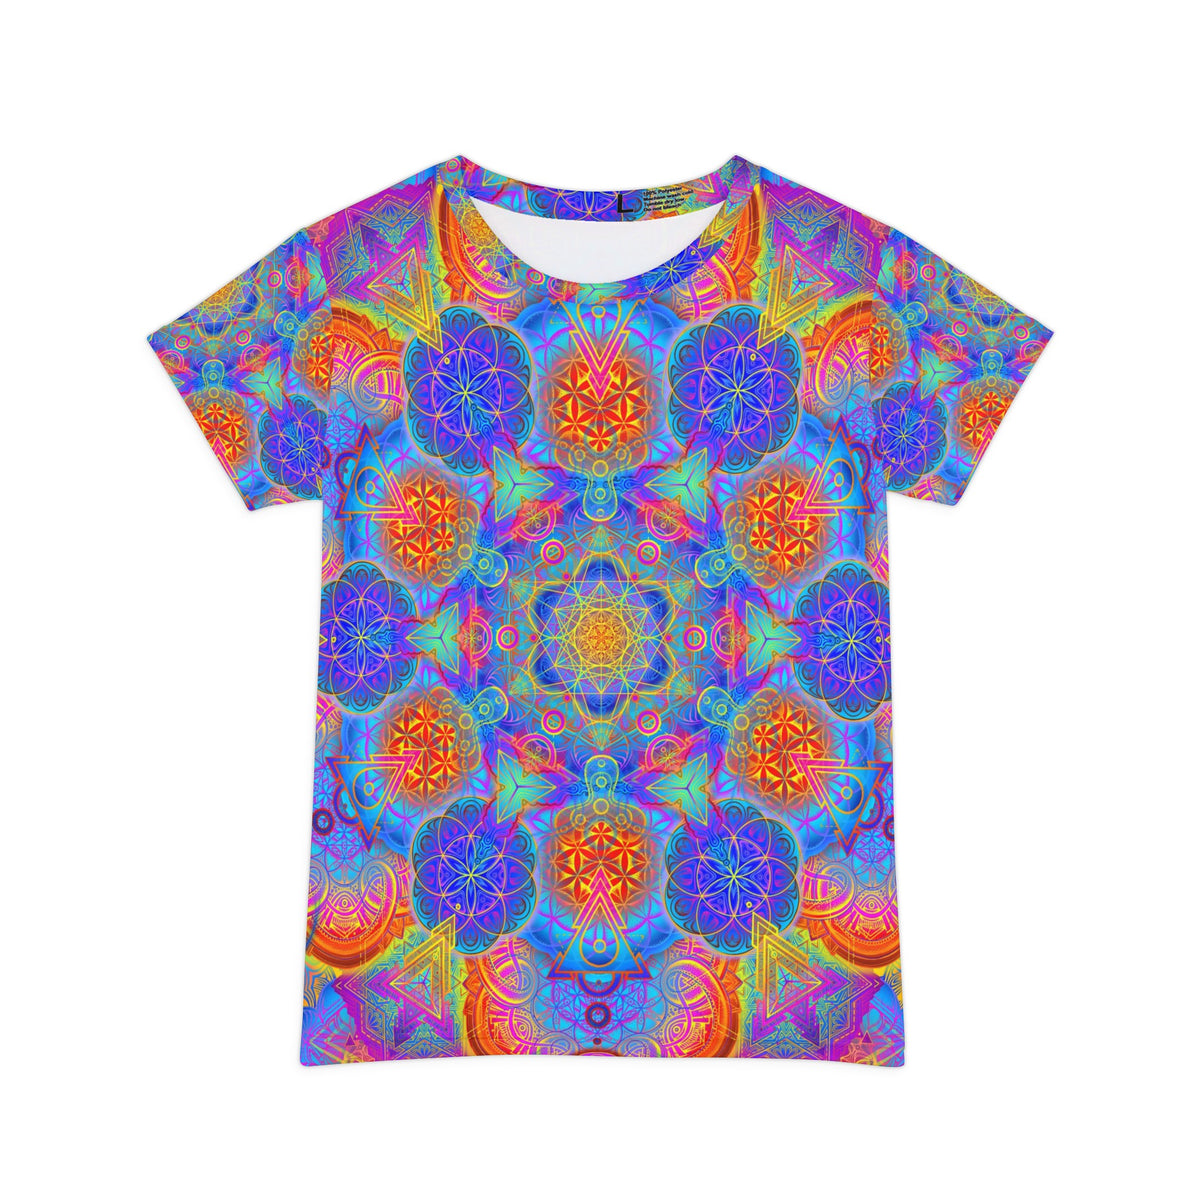 Psychedelic Metatron's Cube Mandala - Women's Short Sleeve Shirt